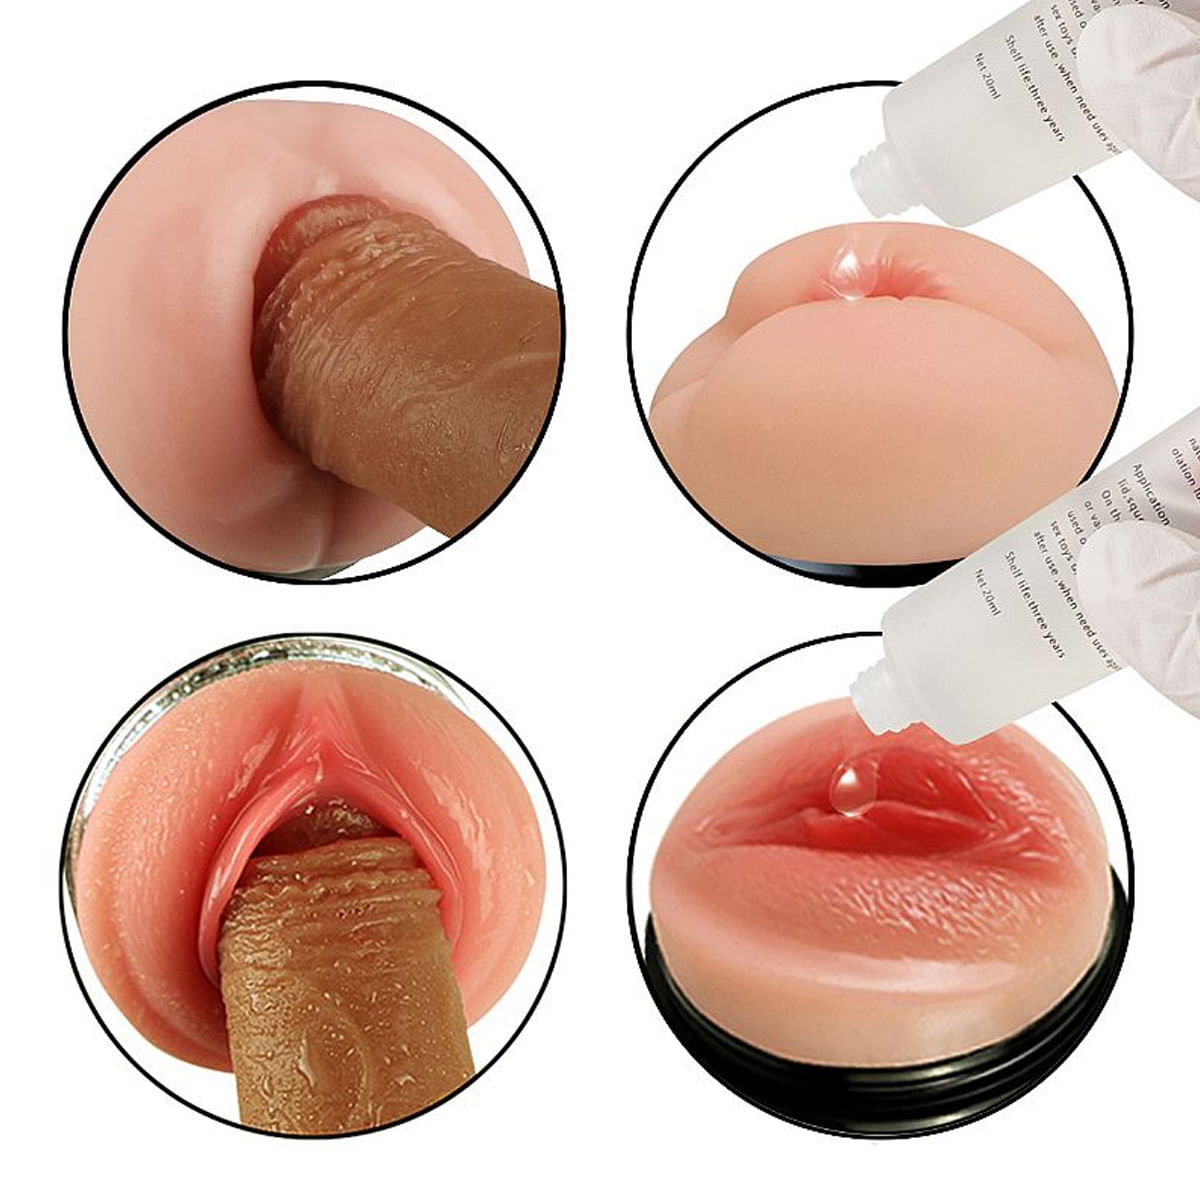 Double Pump Masturbador em Formato de Vagina e ÂNUS em CyberSkin 19x7 cm Miss Collection